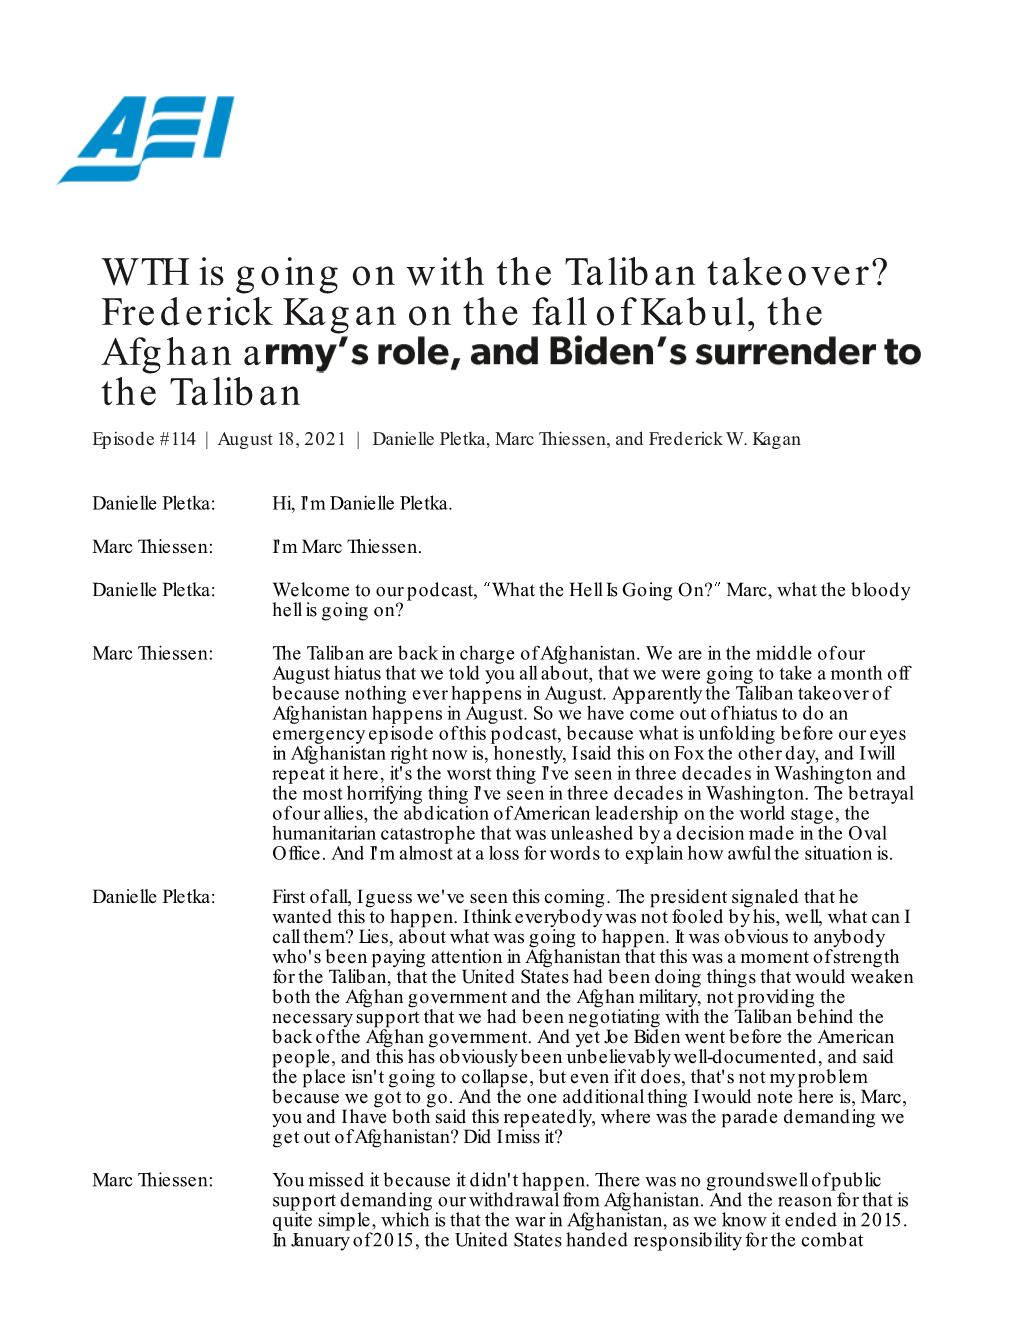 Frederick Kagan on the Fall of Kabul, the Afghan a the Taliban